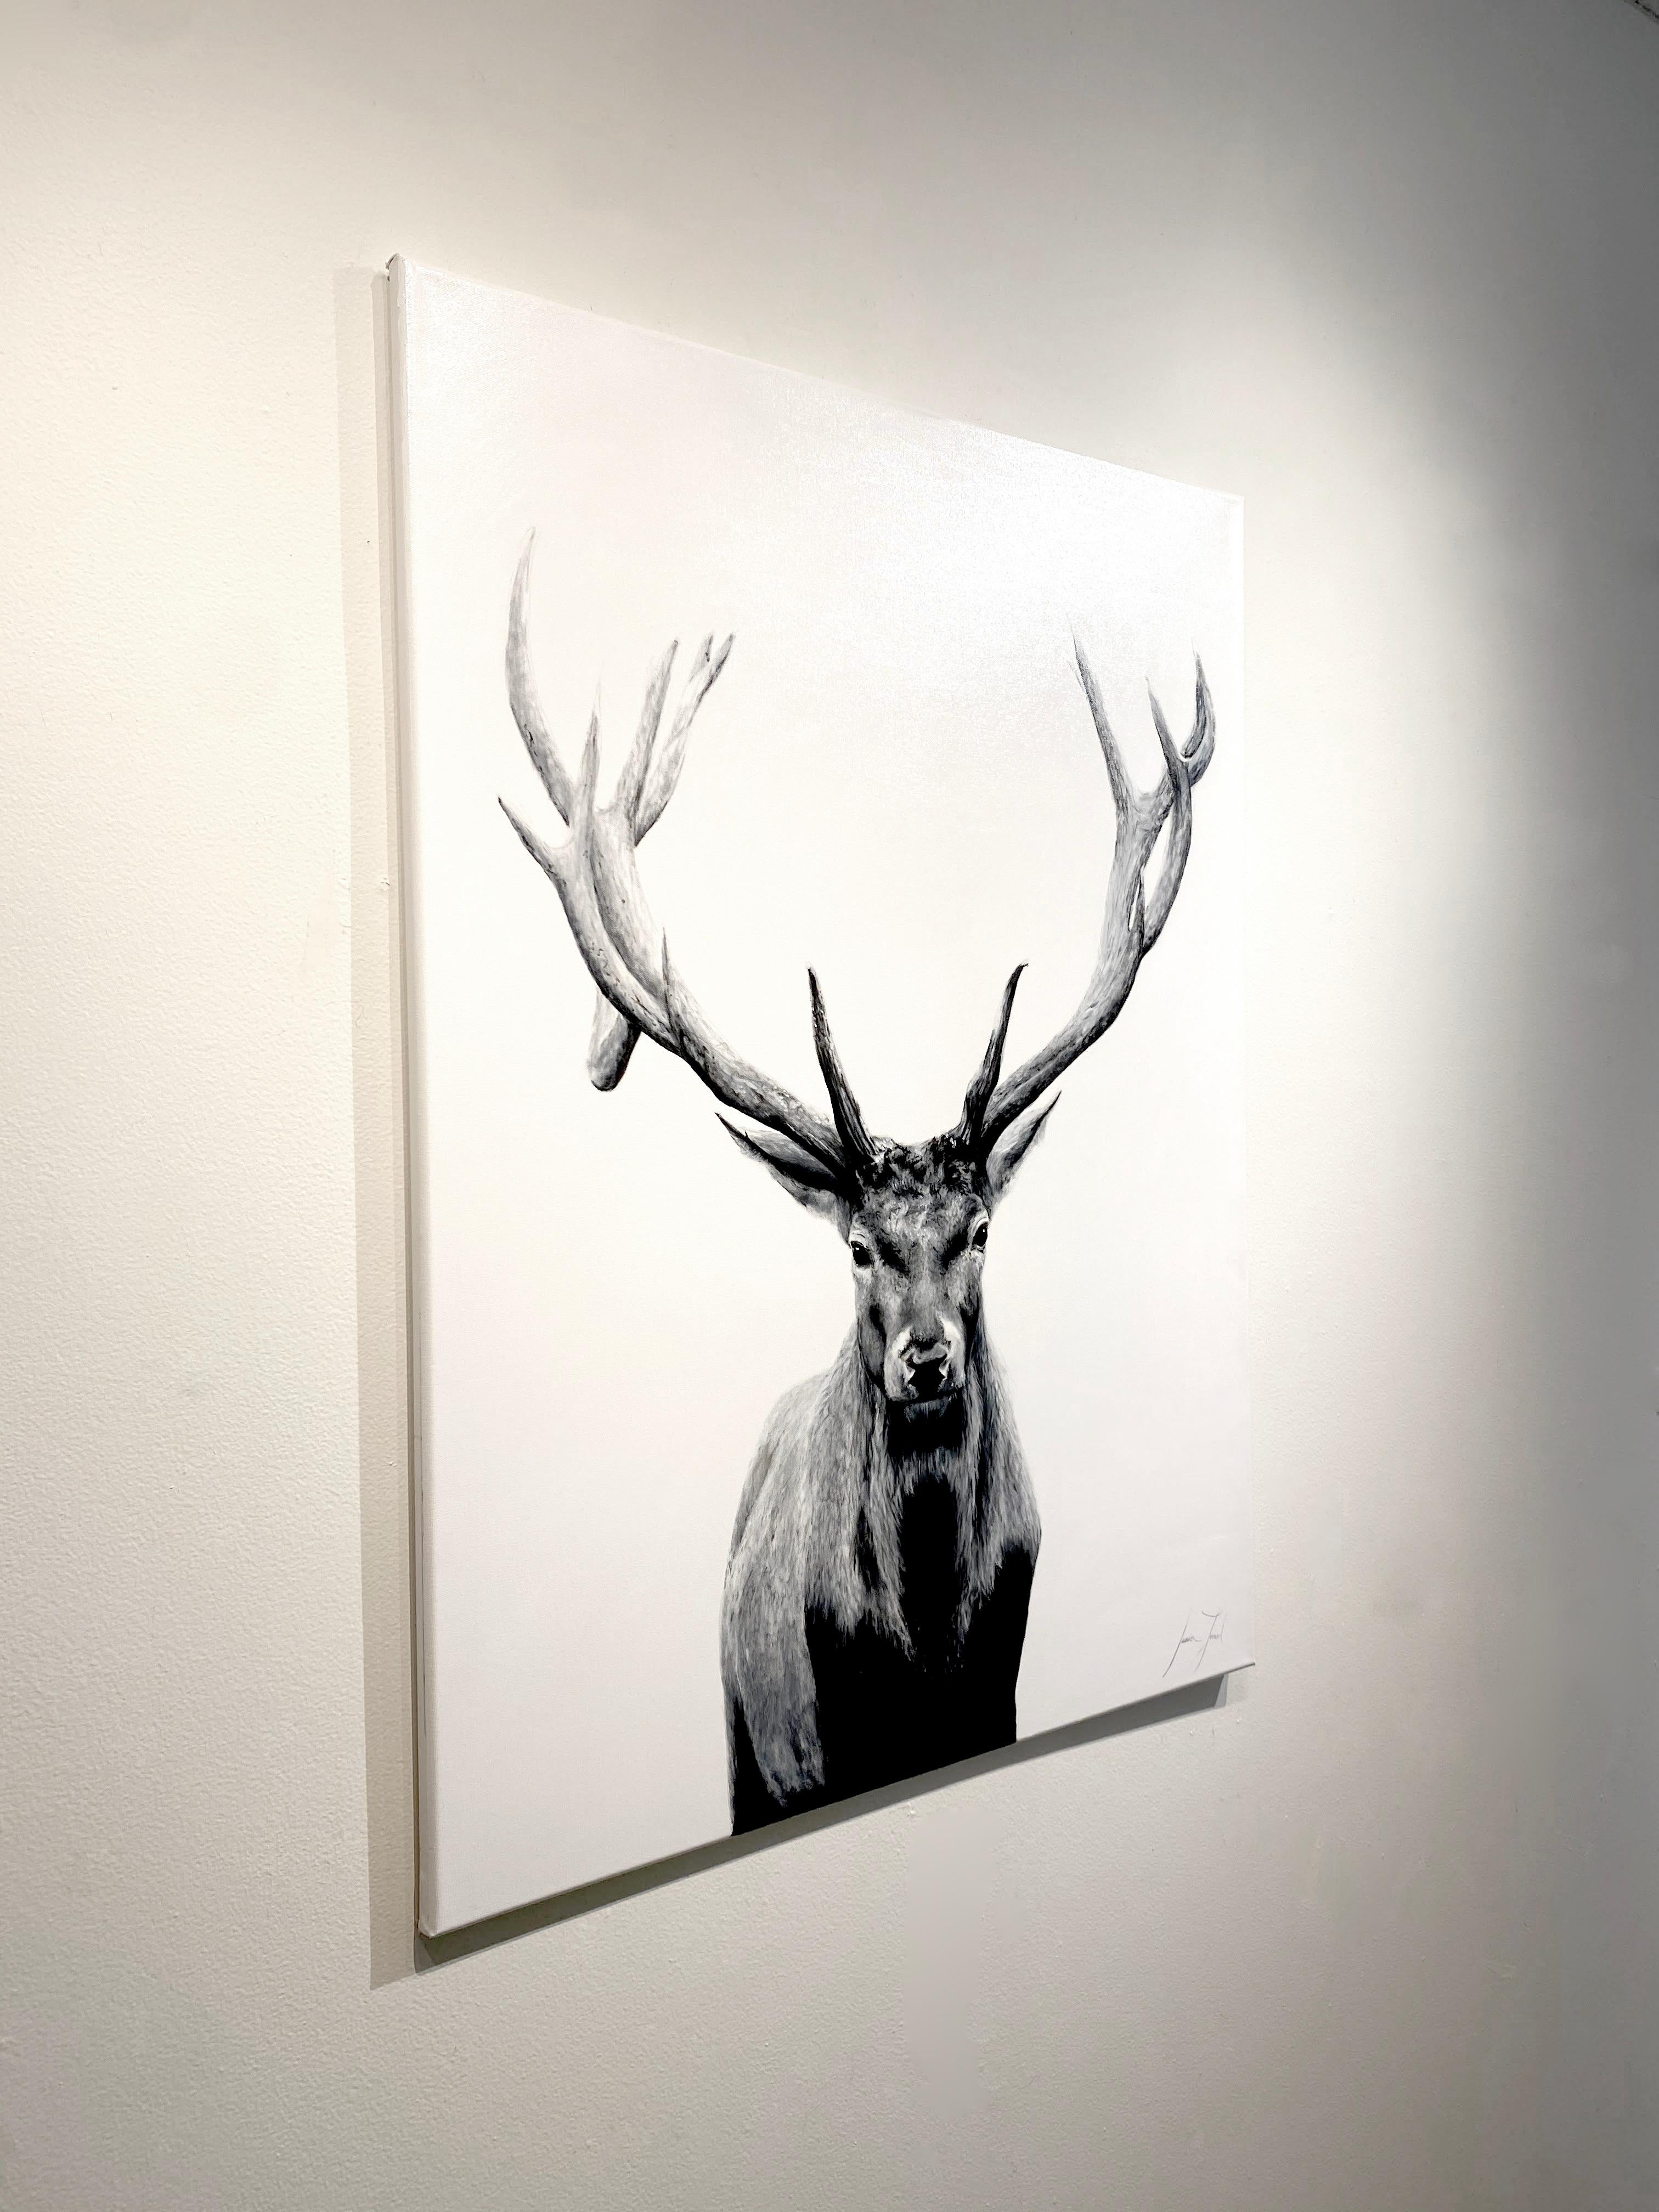 This black and white elk portrait, 